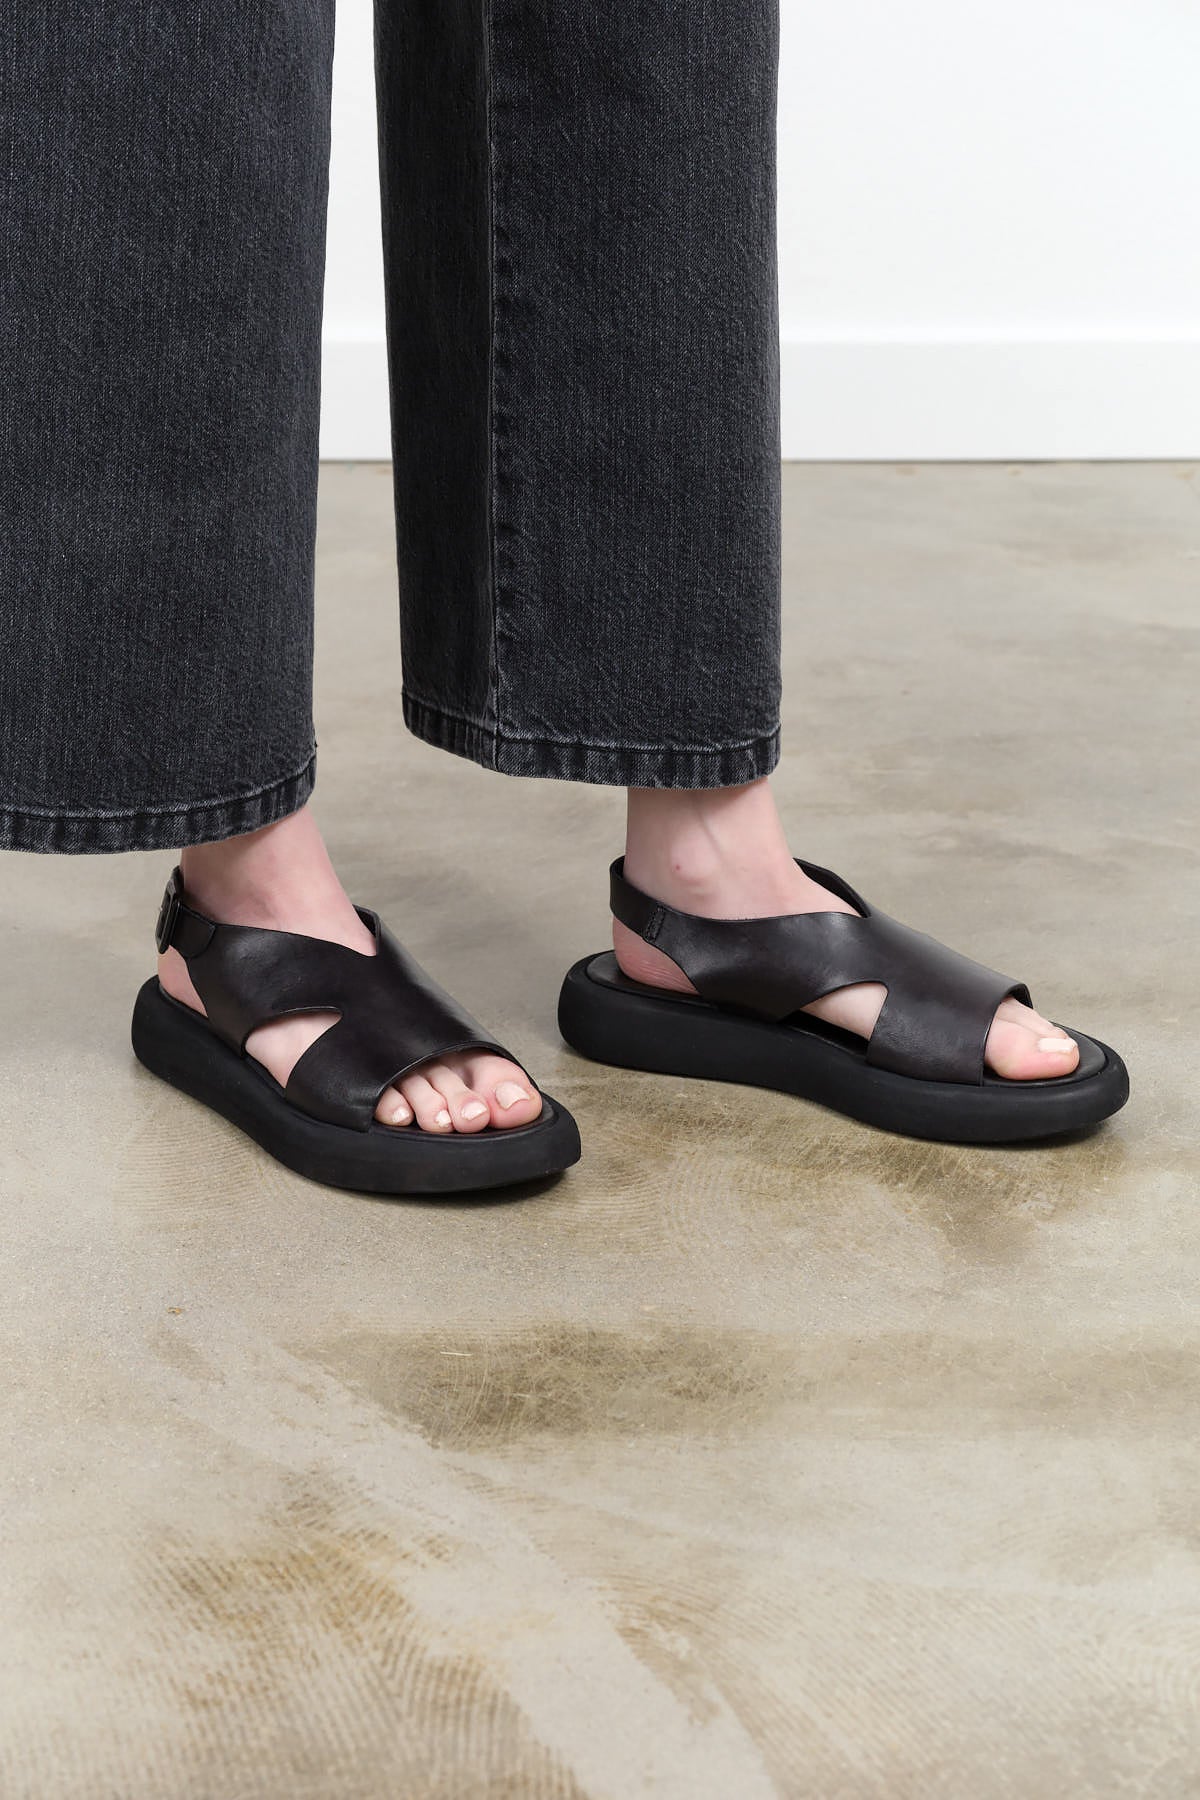 Black India Platform Sandal by Brador Shoes